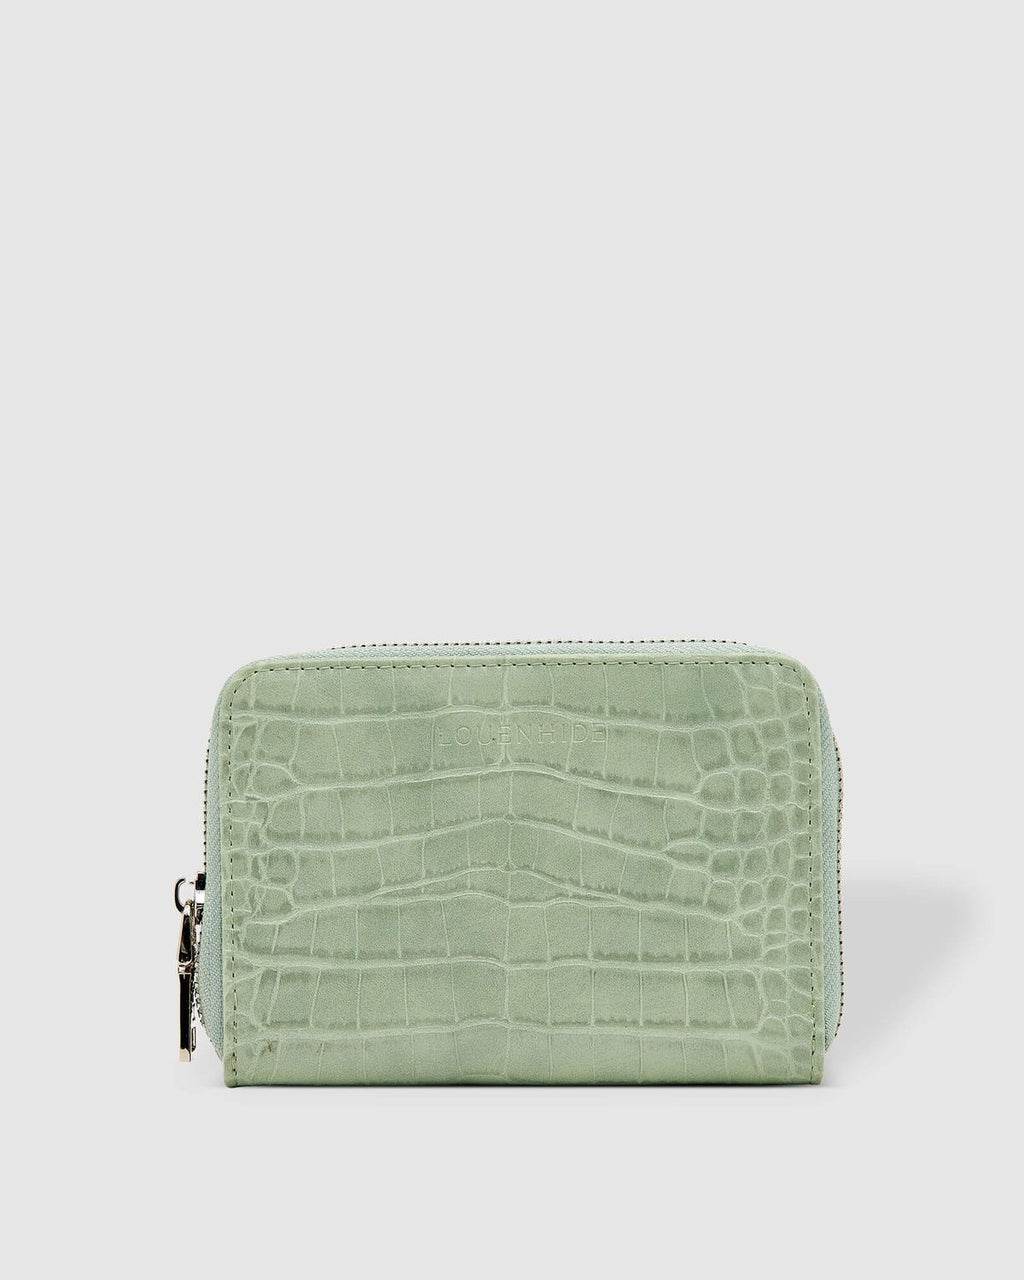 Eden Croc Wallet - Mint